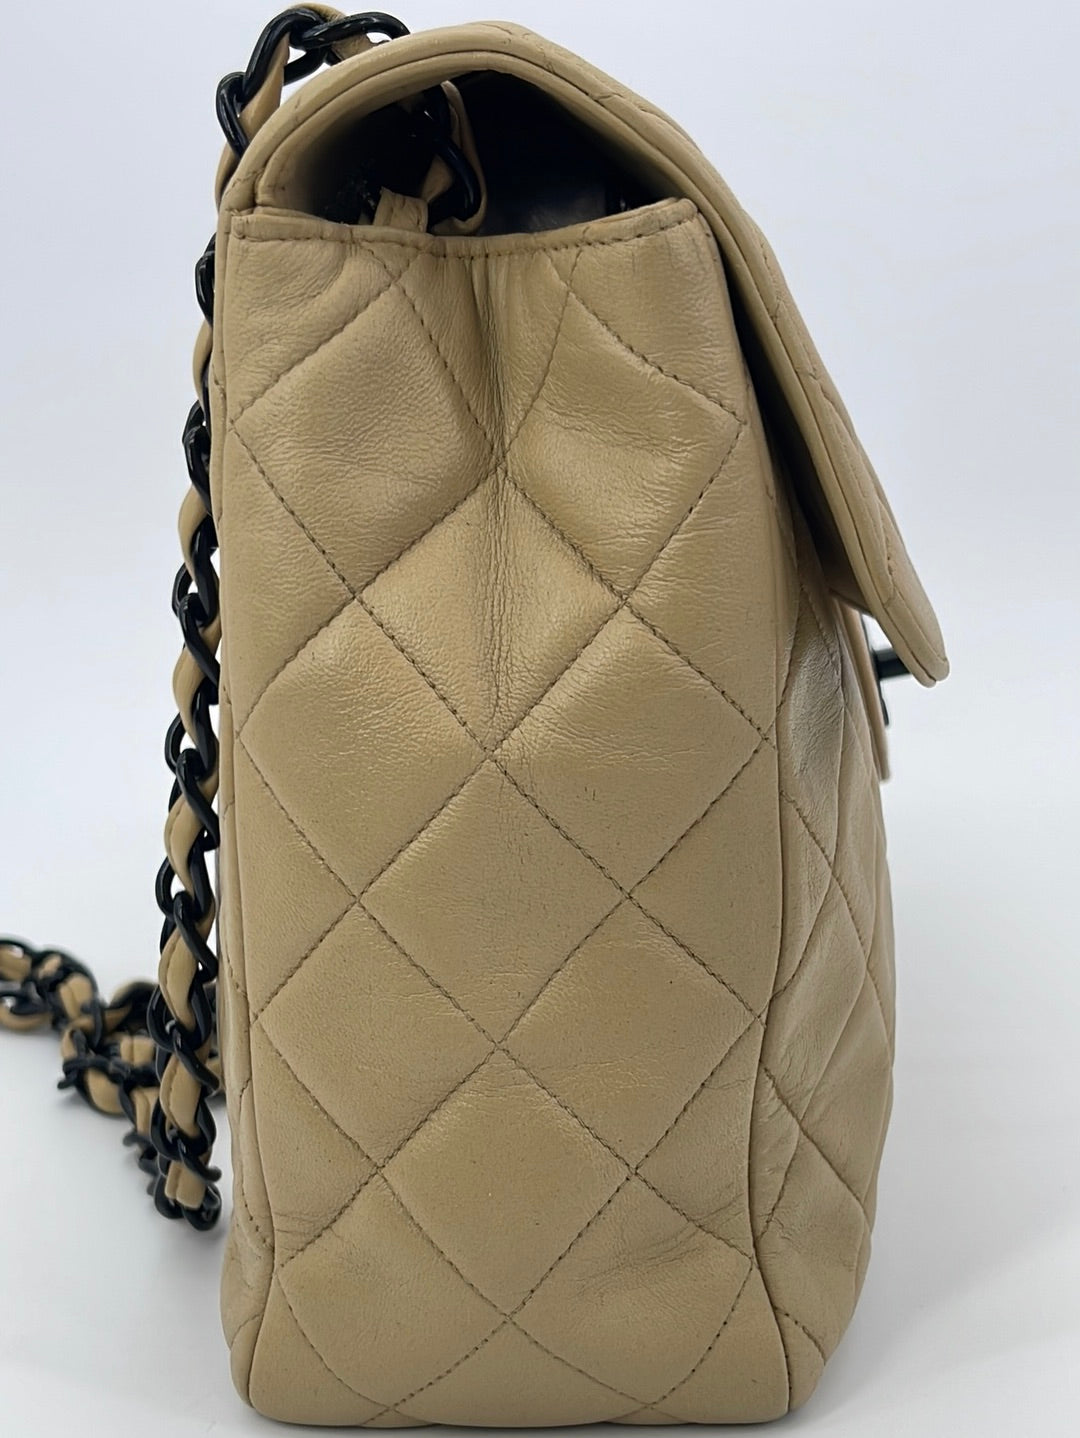 Timeless/classique cloth handbag Chanel Beige in Cloth - 20042634